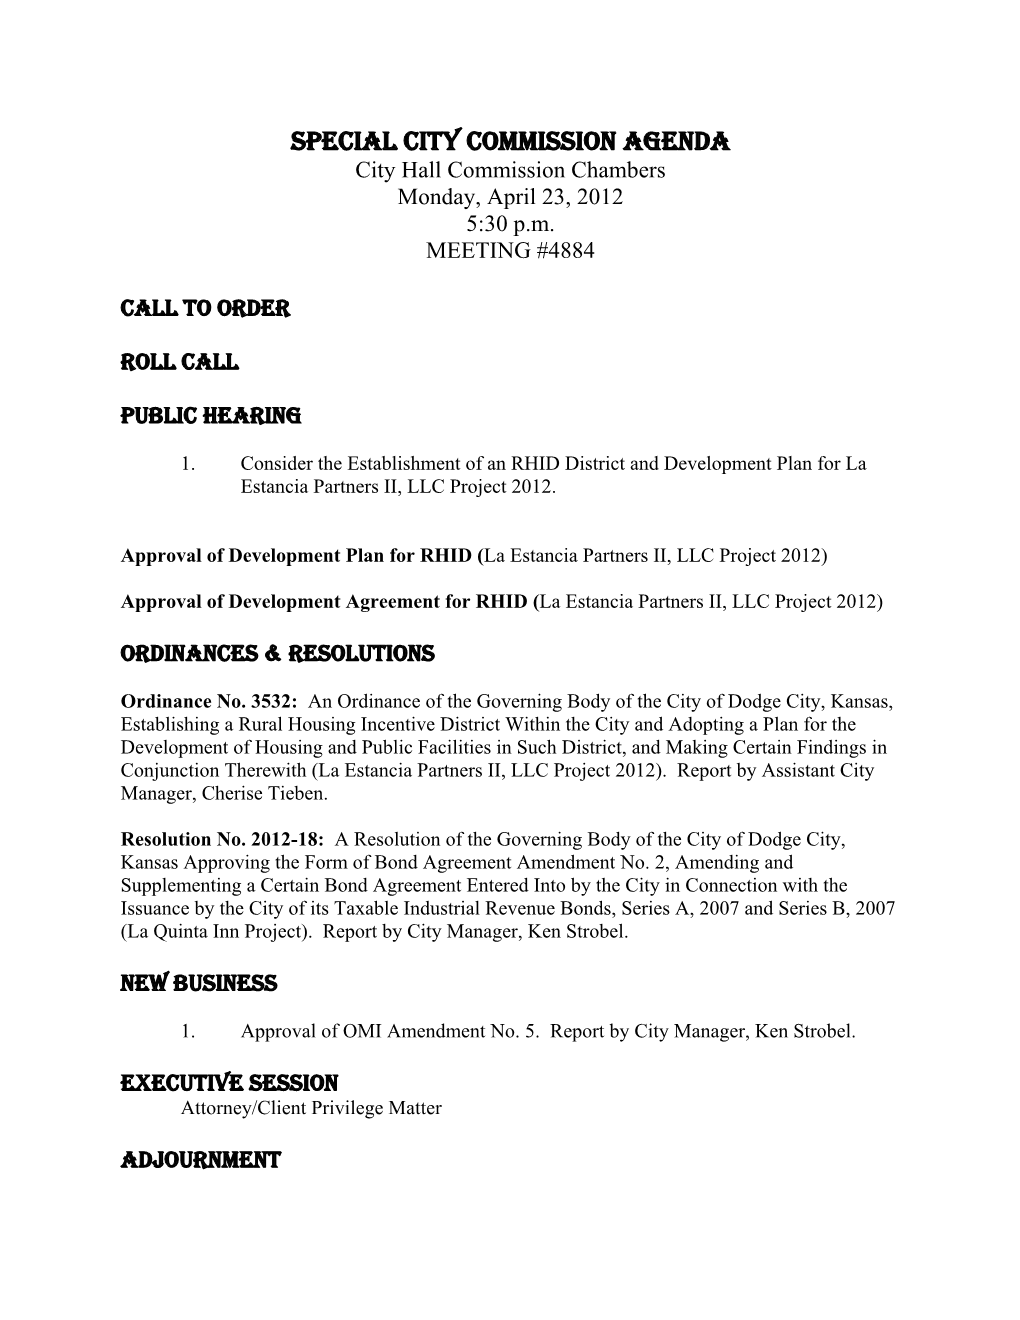 COMMISSION AGENDA City Hall Commission Chambers Monday, April 23, 2012 5:30 P.M